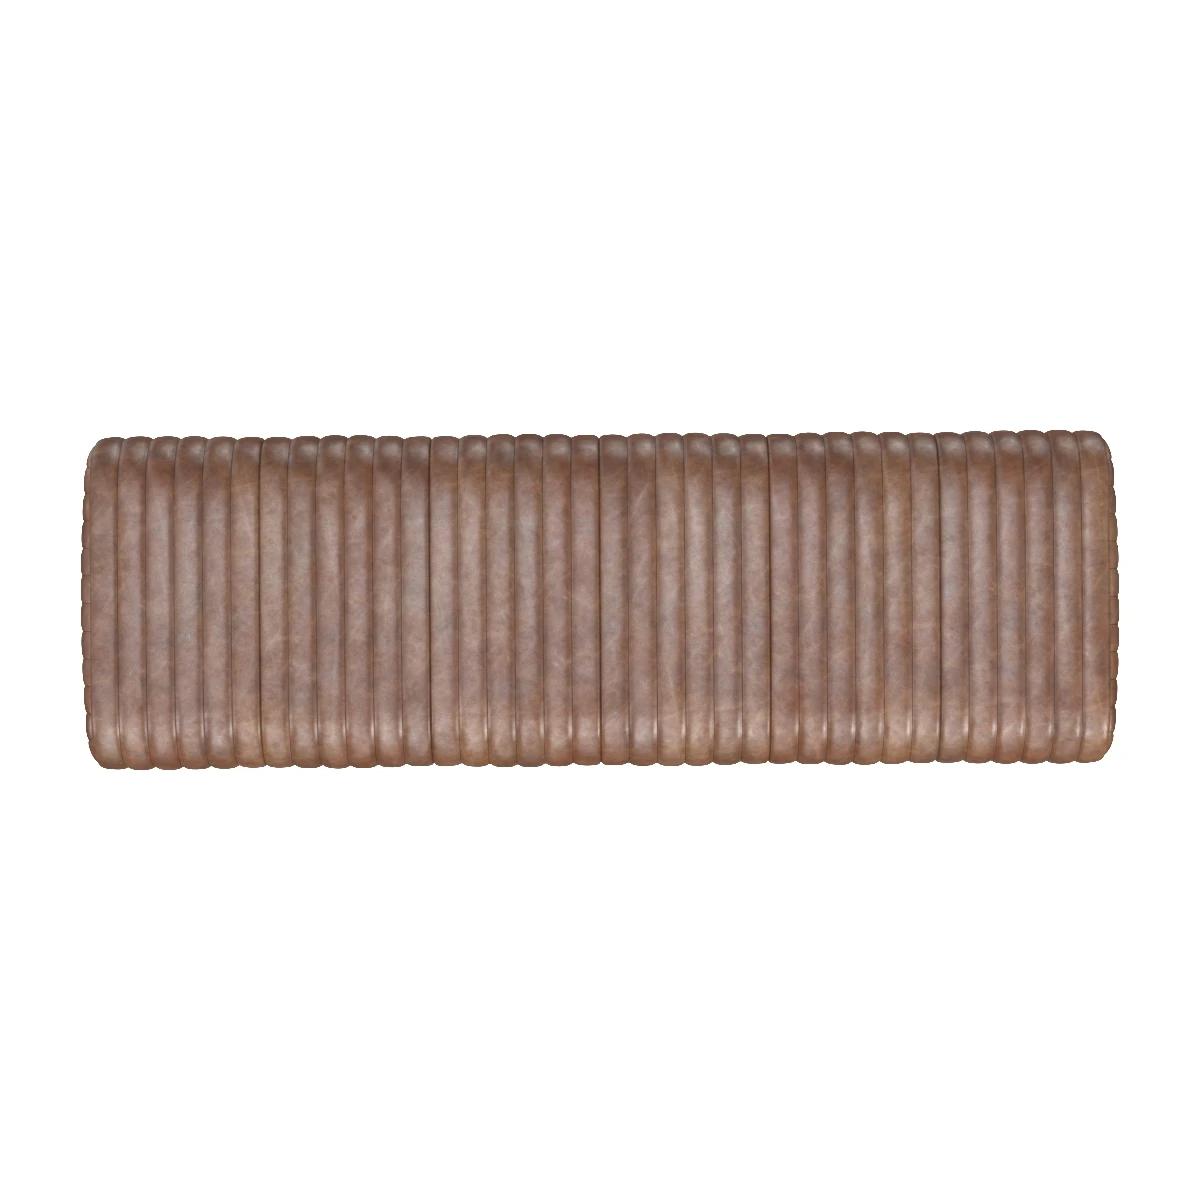 Endora Bench Open Road Brown Leather PK-1105-14 3D Model_04